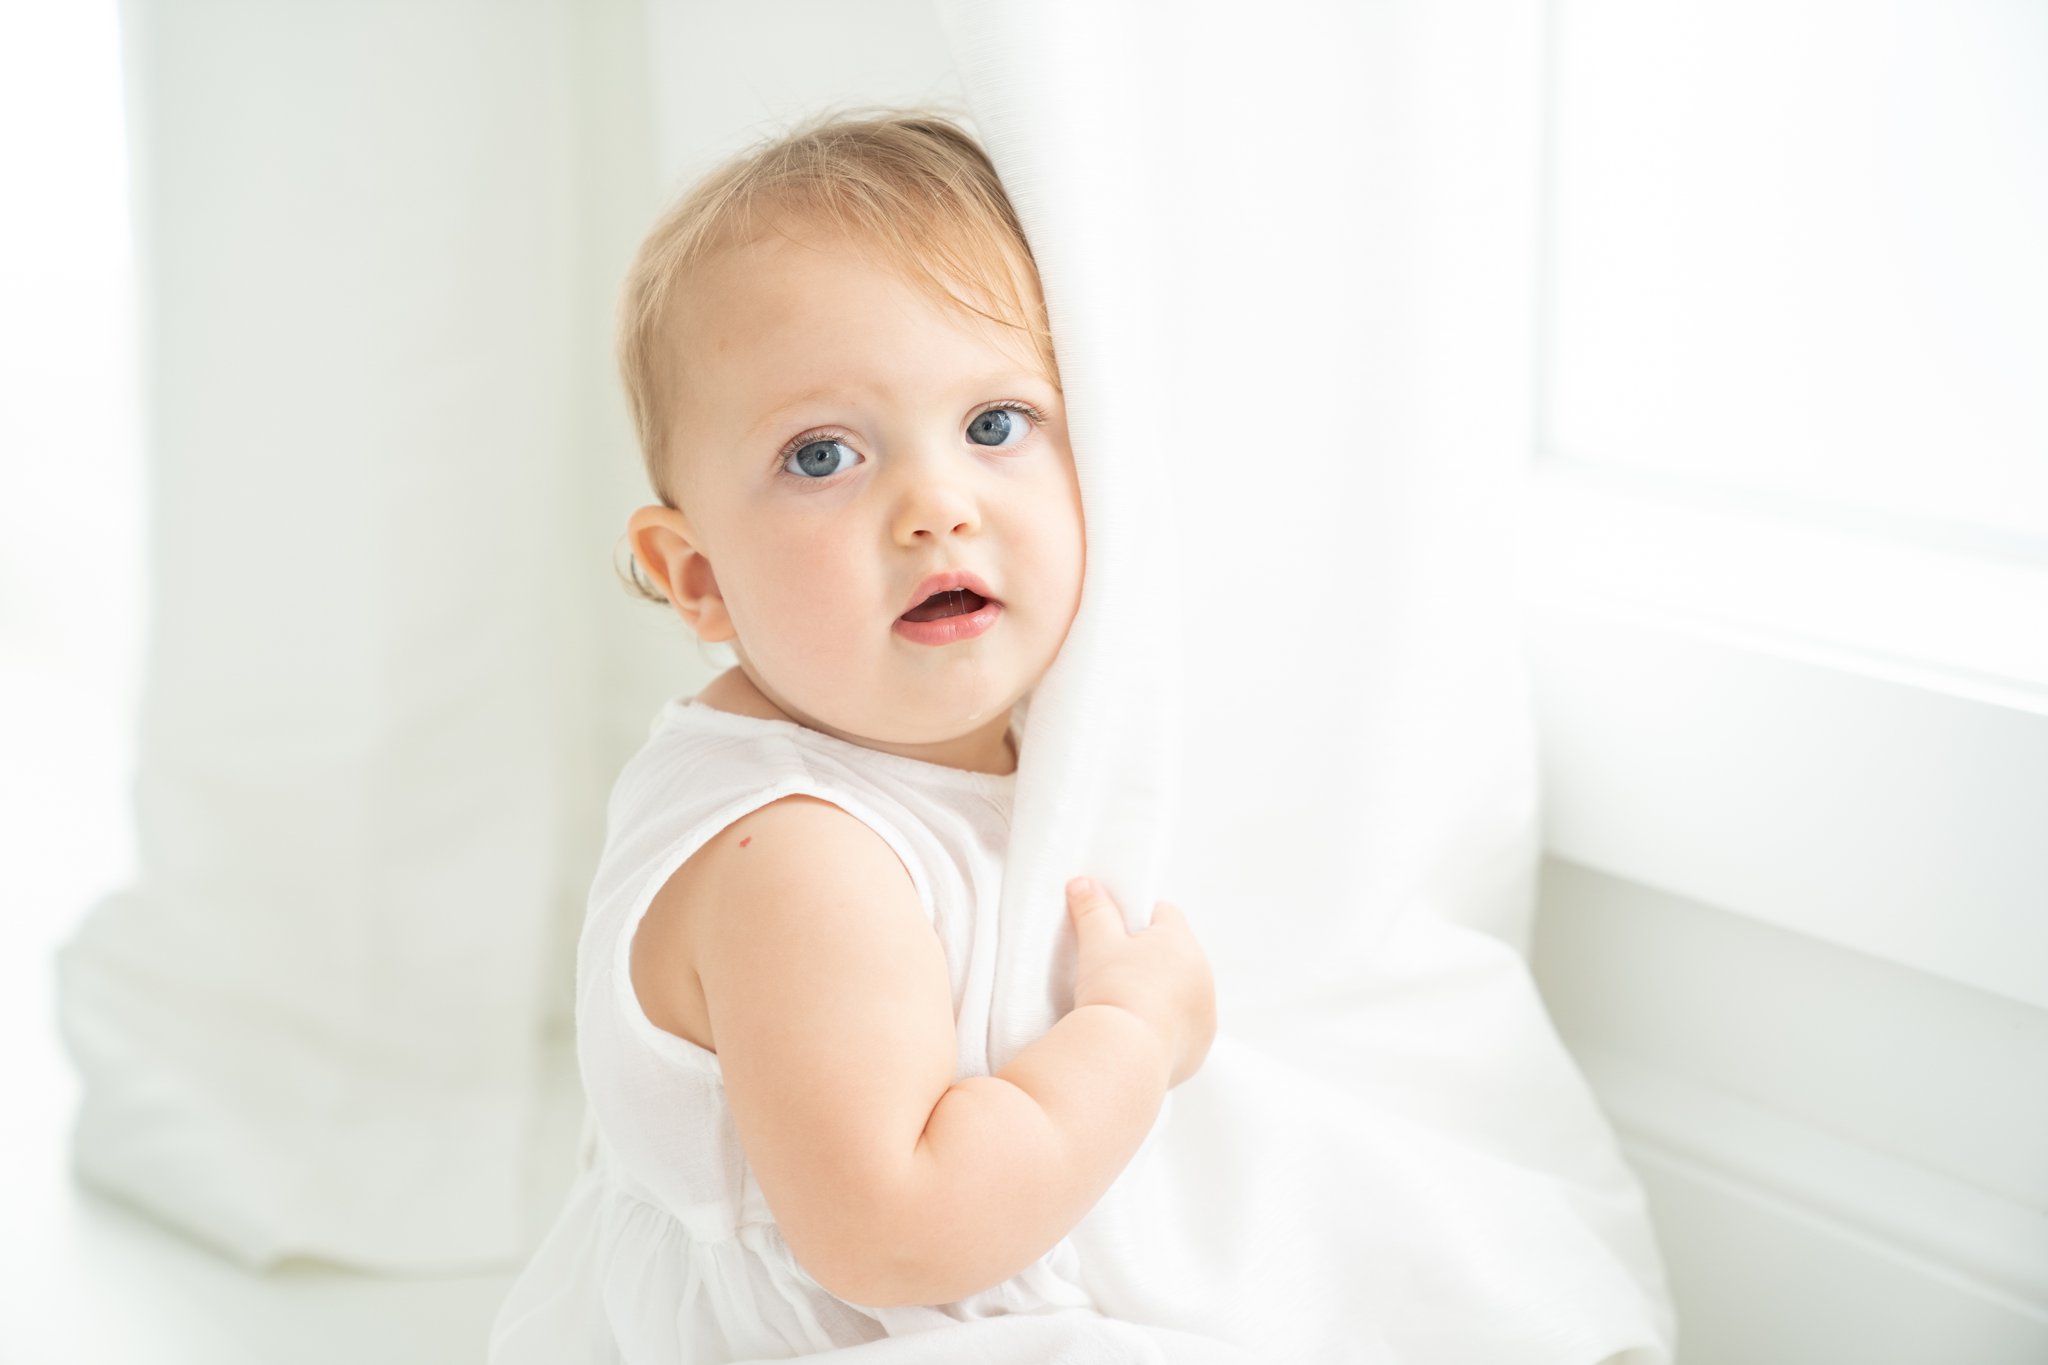 12 month old baby girl in white having her pictures taken in jupiter photography sttudio